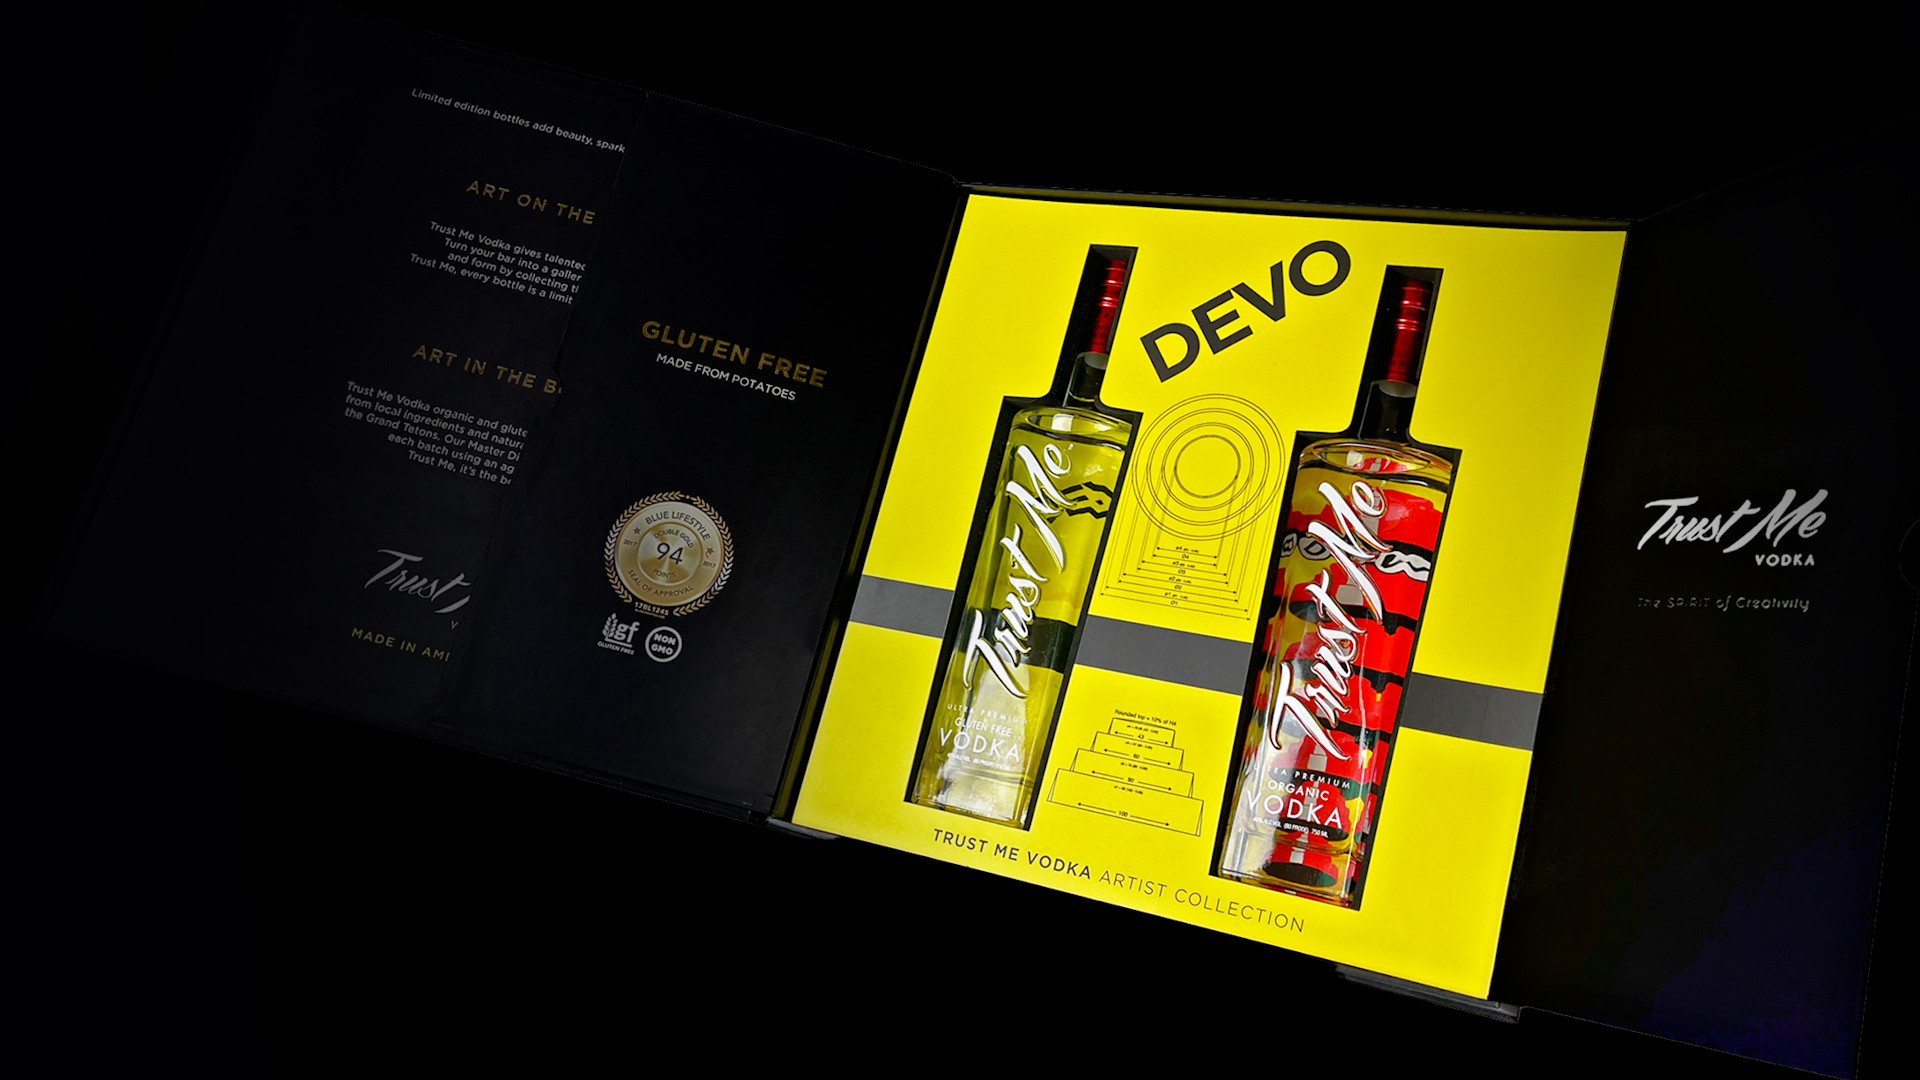 Devo’s Trust Me Vodka Collector’s Set Unboxing